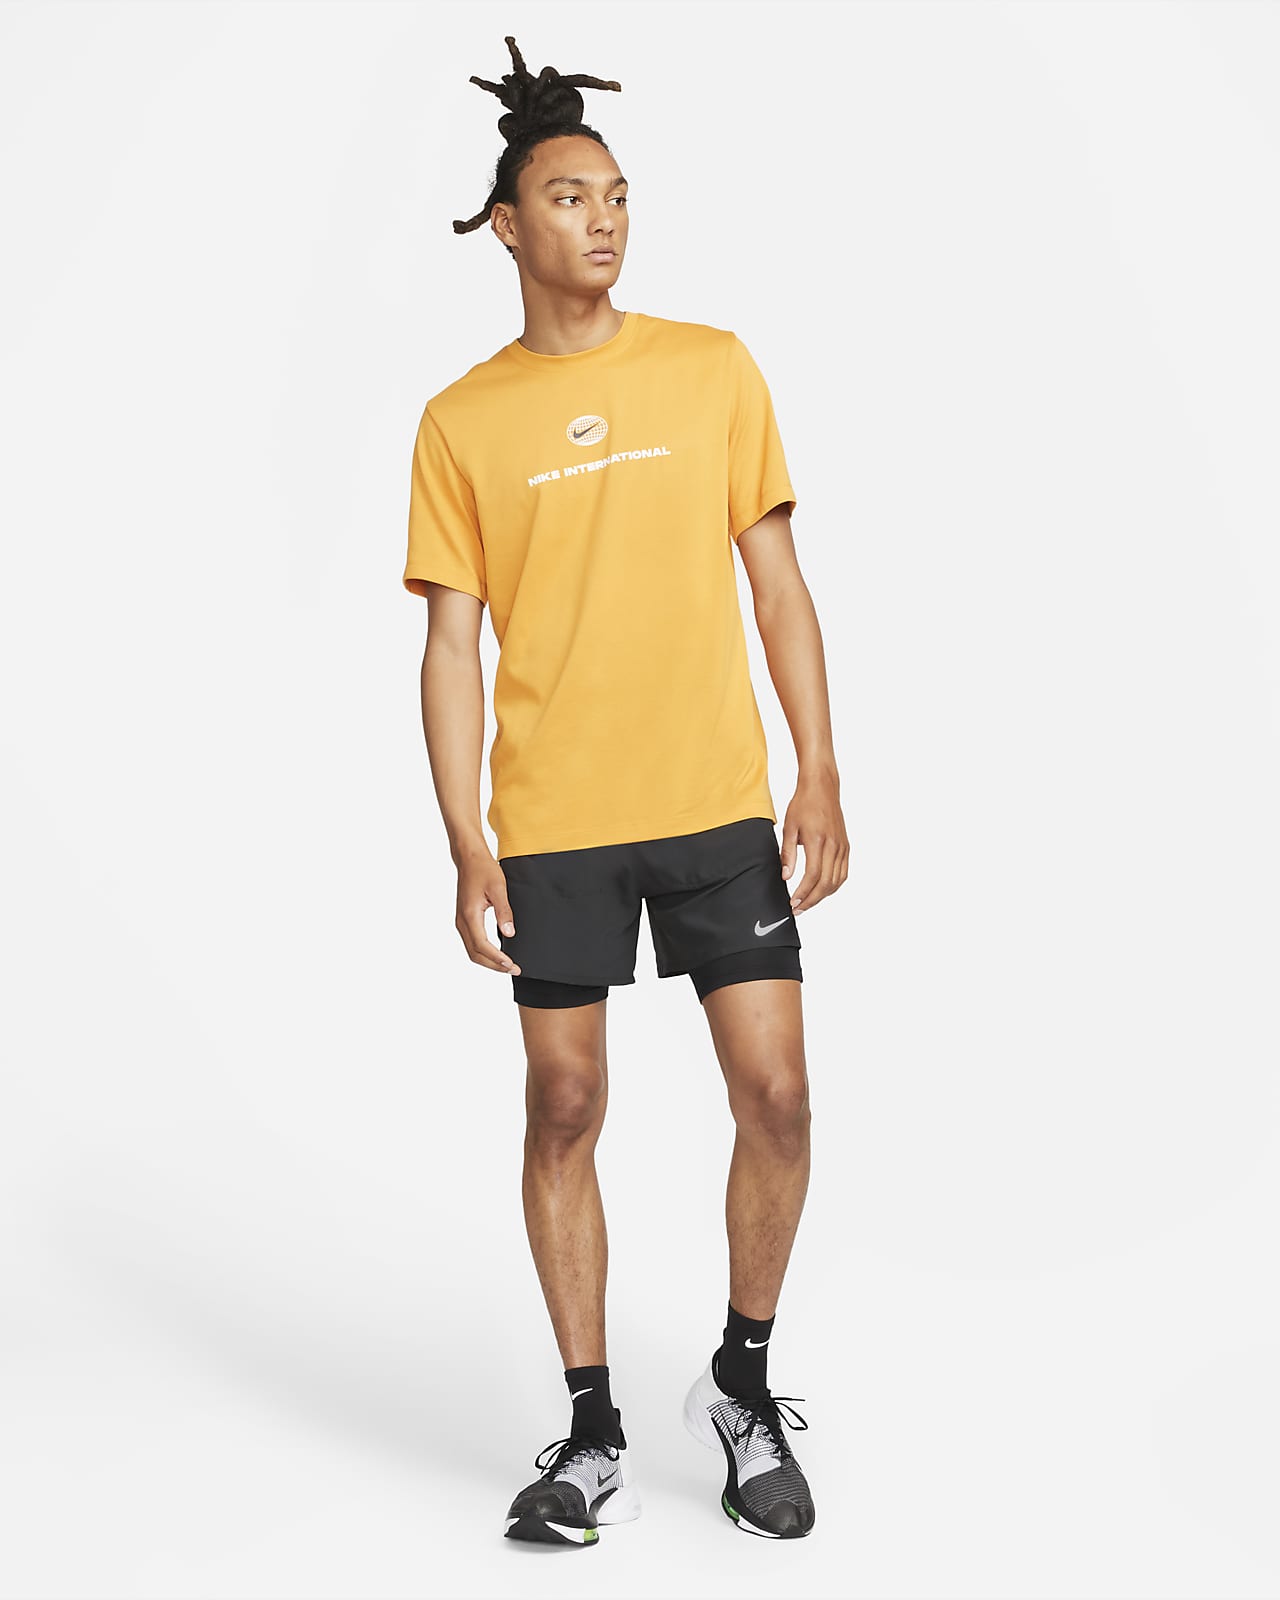 Yellow Gym Shorts -  Canada